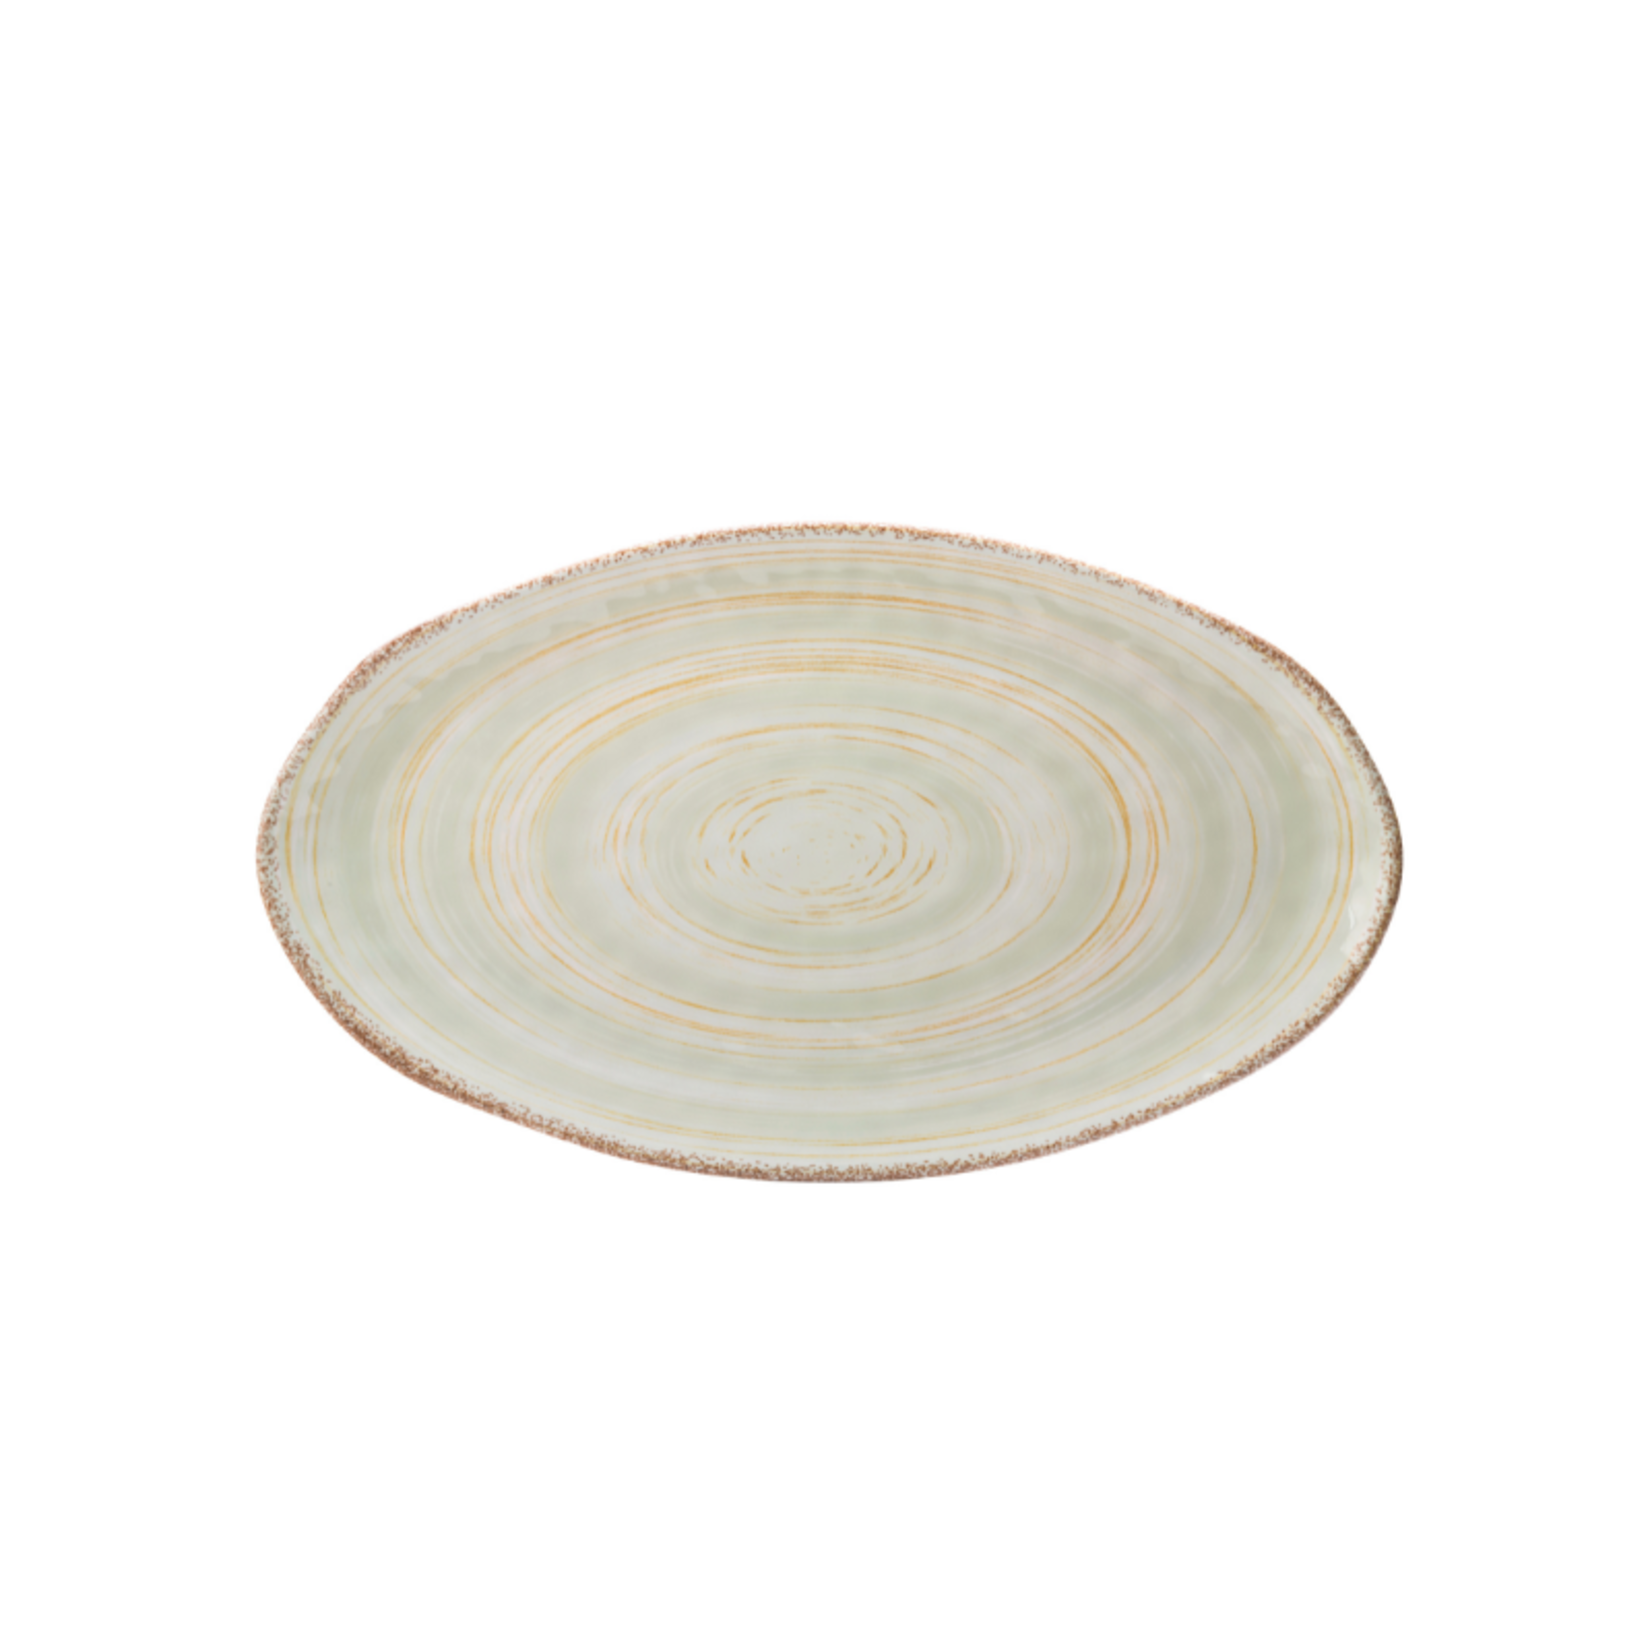 Hospitality Brands Wildwood Green Platter 20.75 x 11.75" (52.5 x 30cm) 6 PC/CS